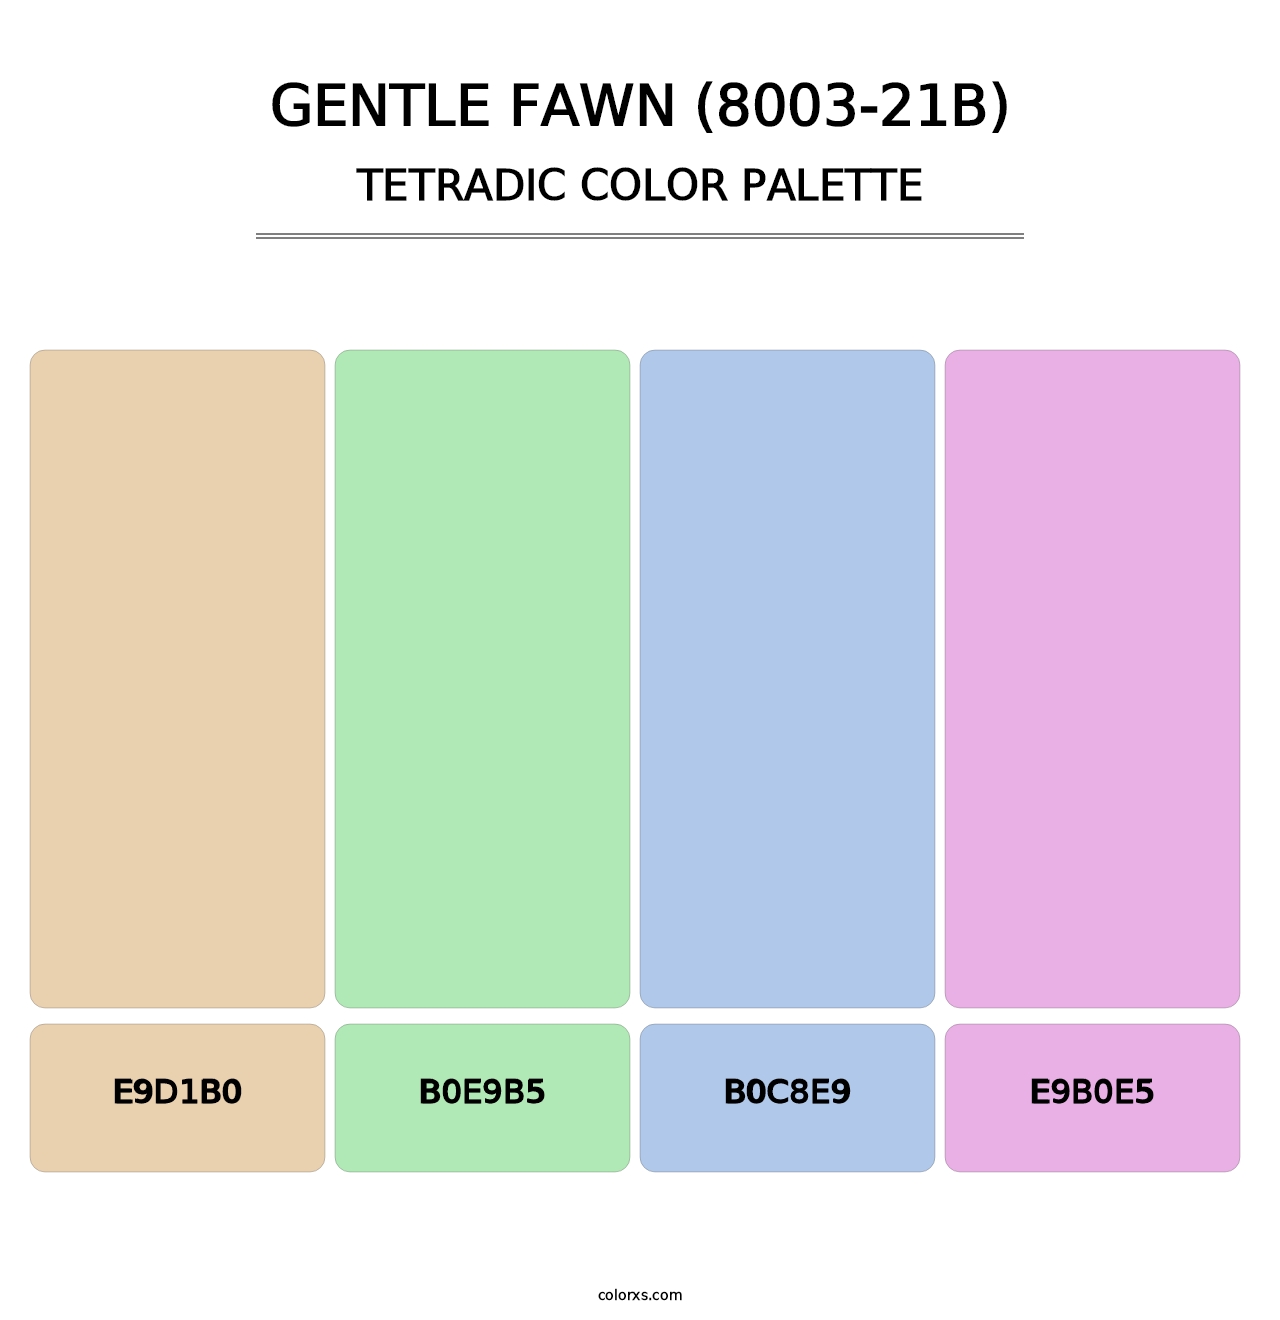 Gentle Fawn (8003-21B) - Tetradic Color Palette